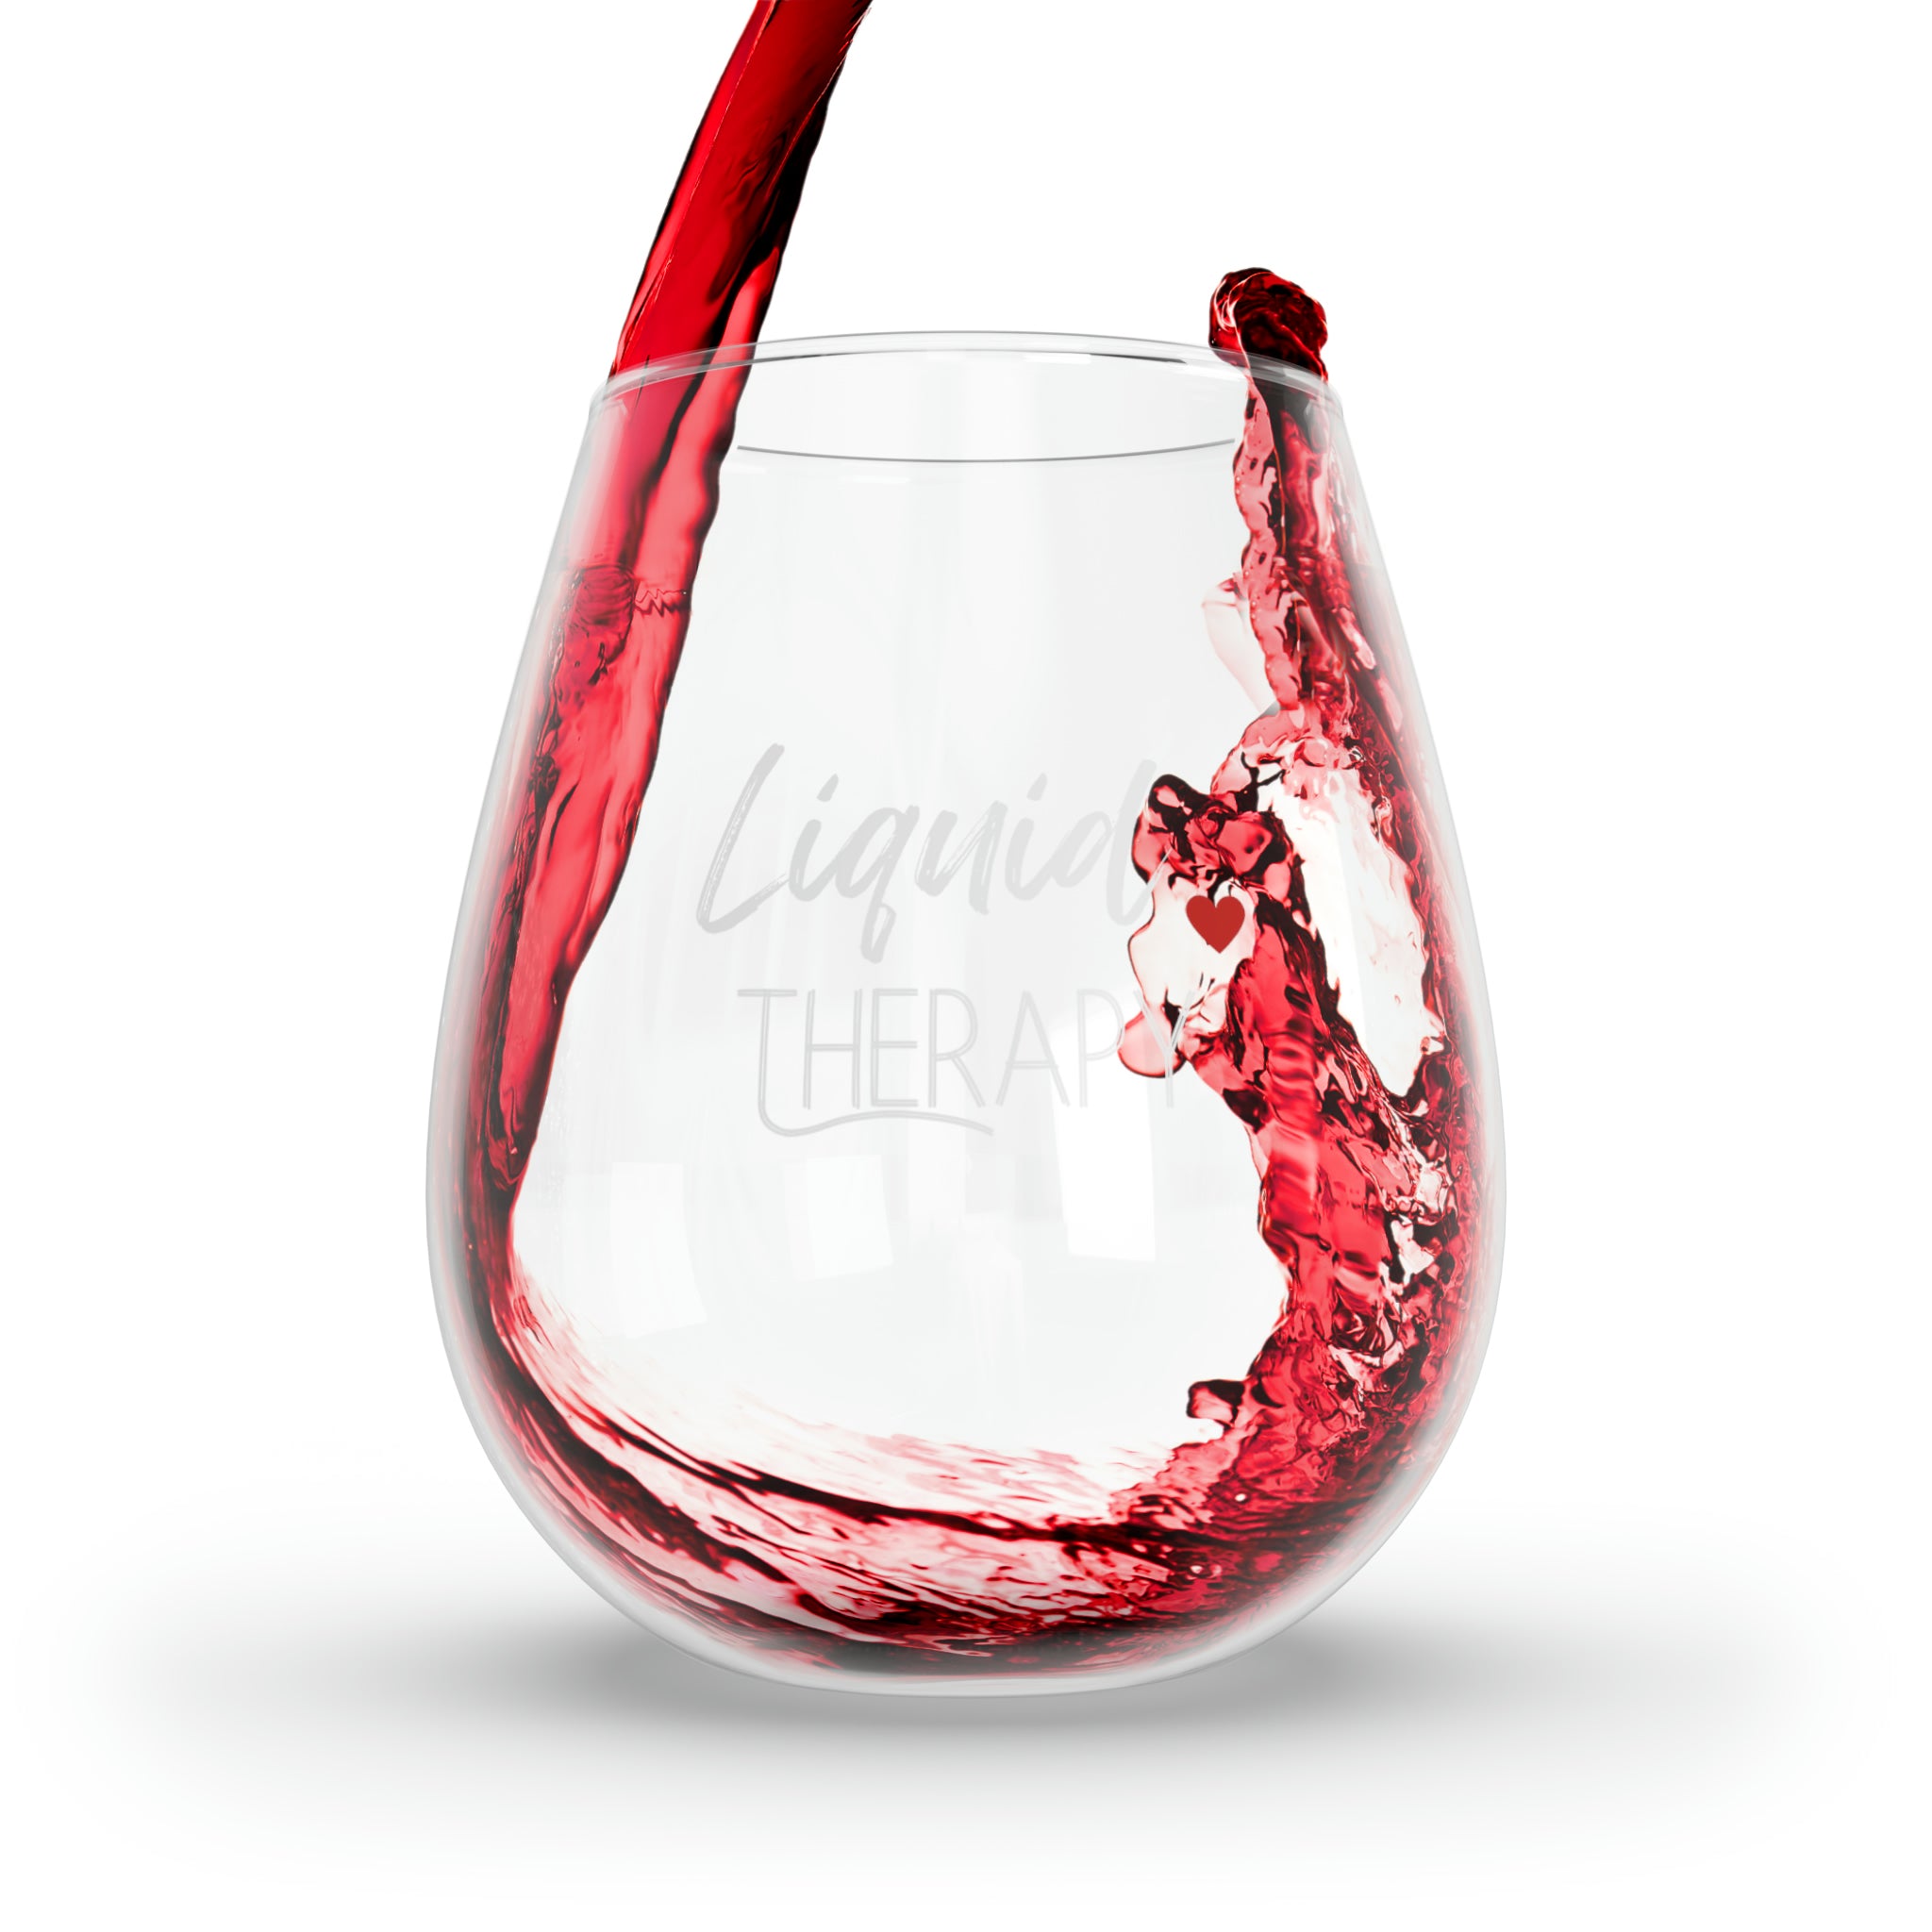 Stemless Wine Glass, 11.75oz - Liquid Therapy